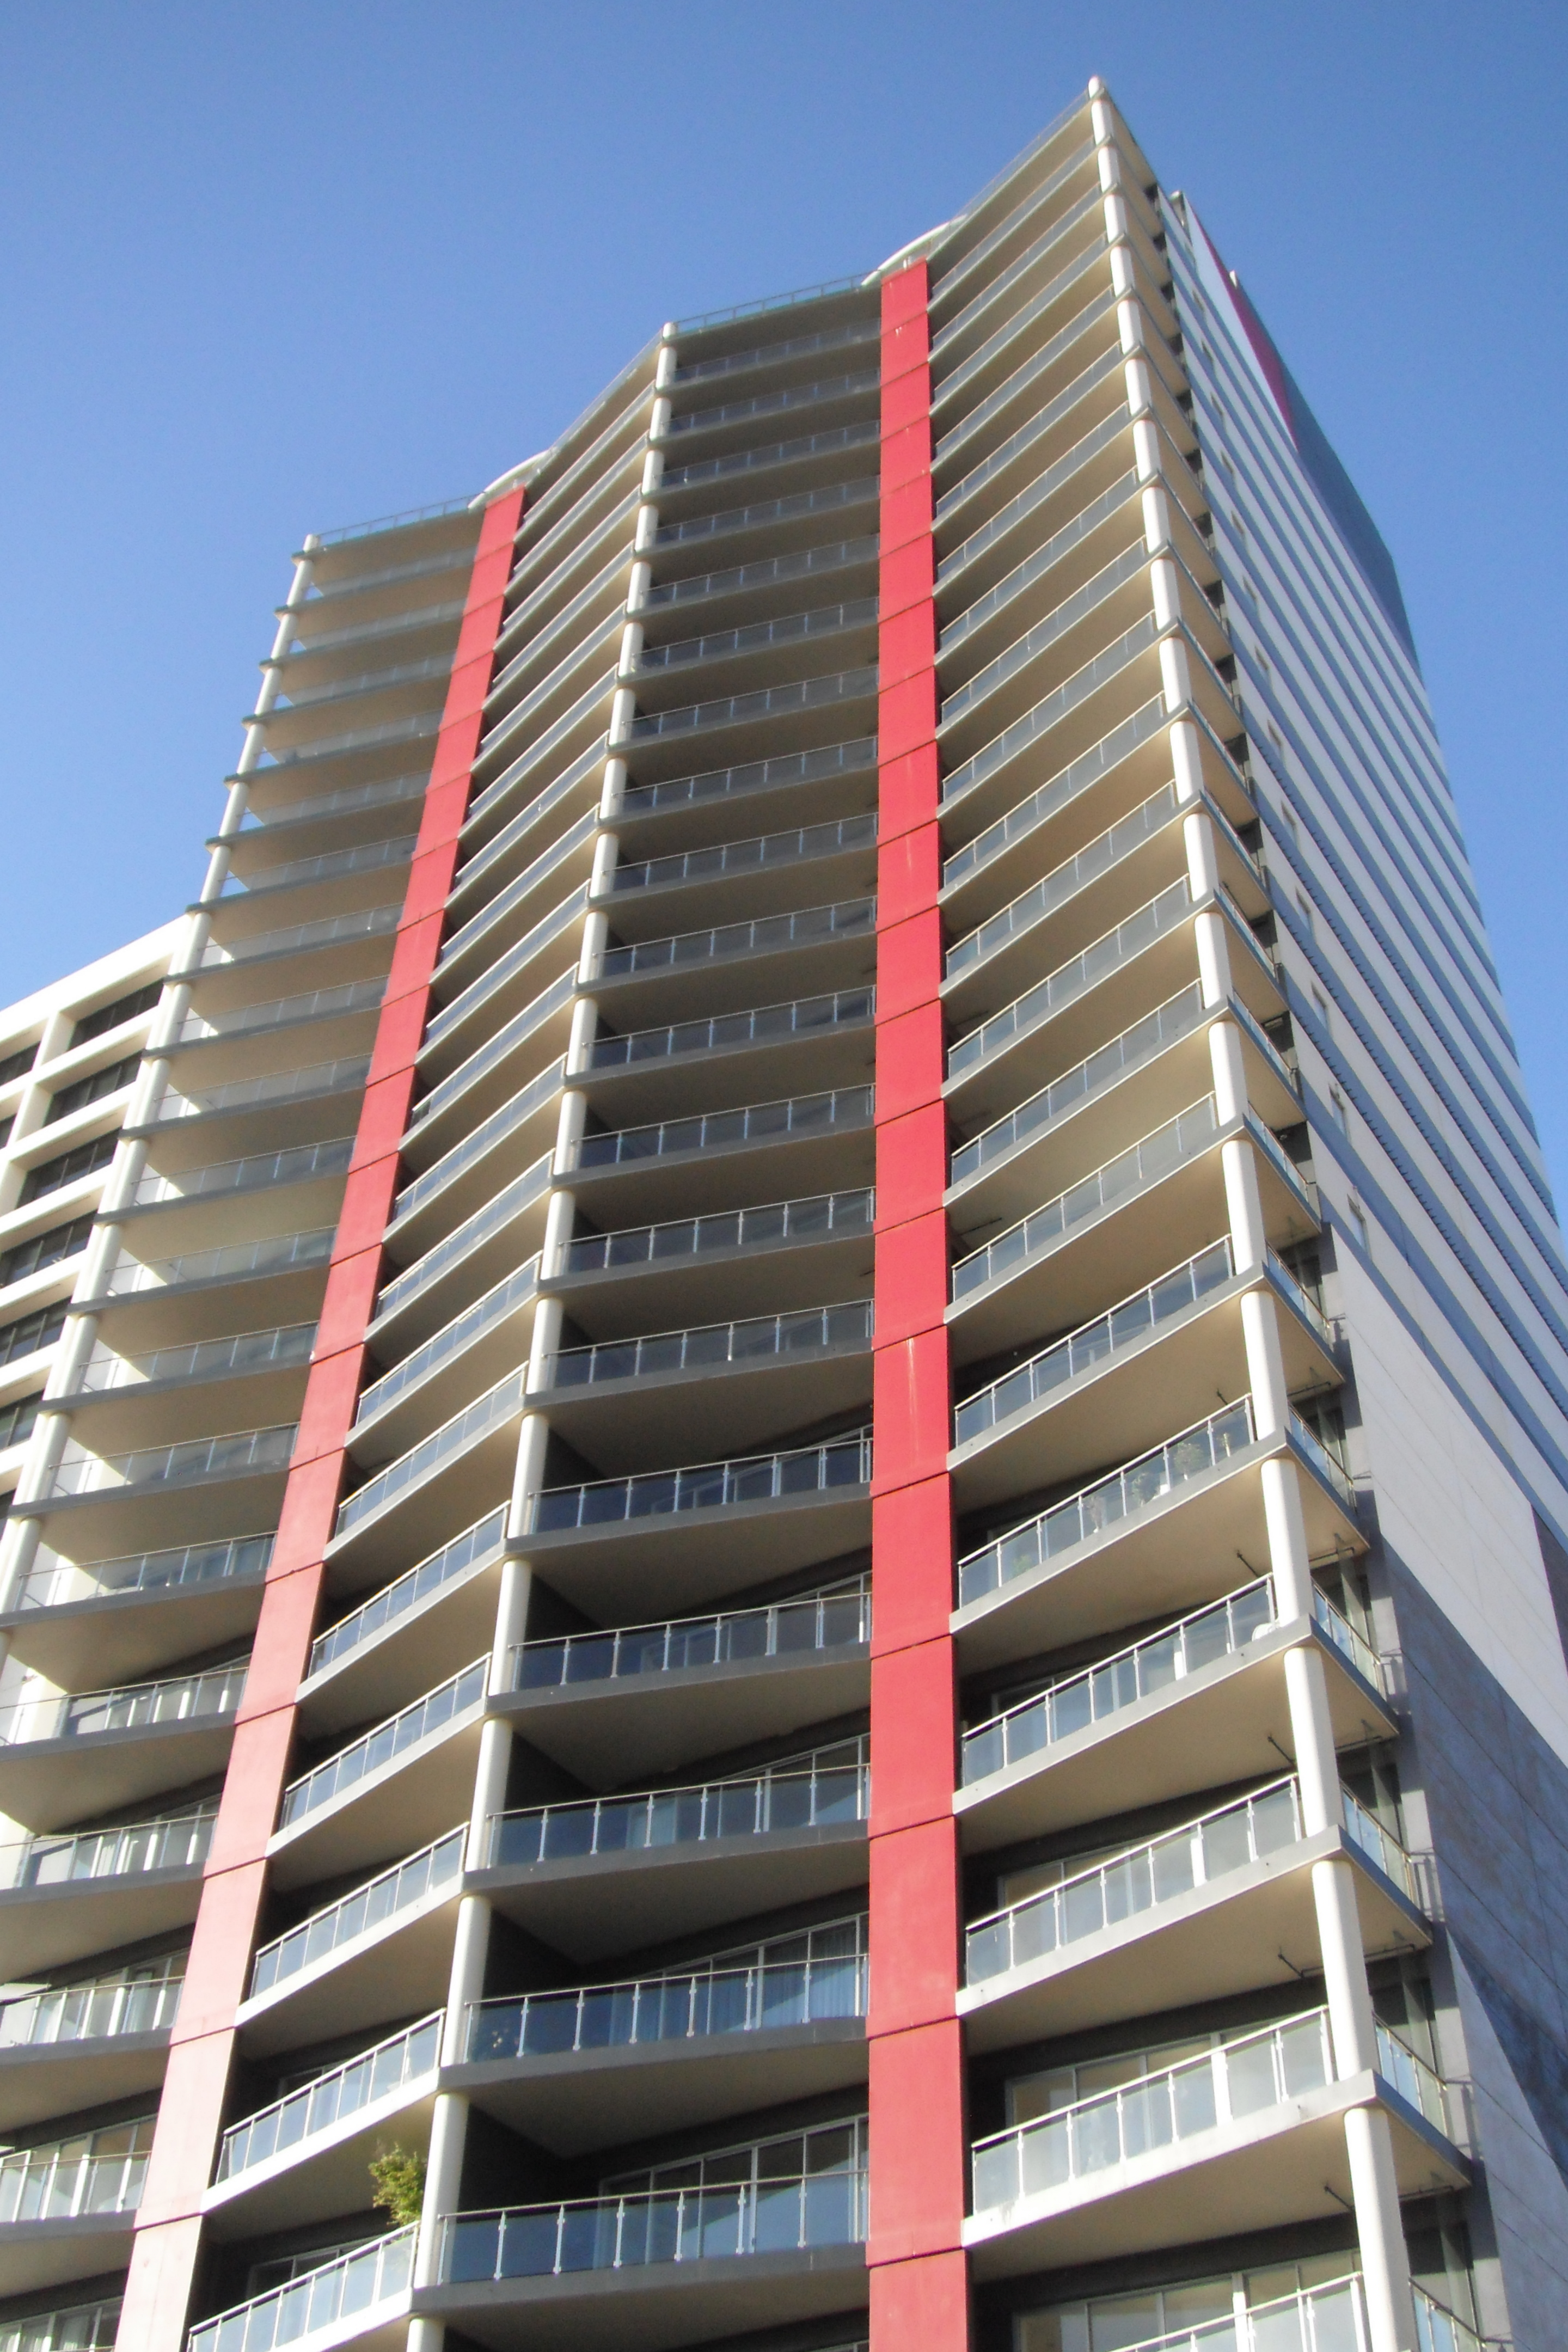 File:High building.jpg - Wikimedia Commons